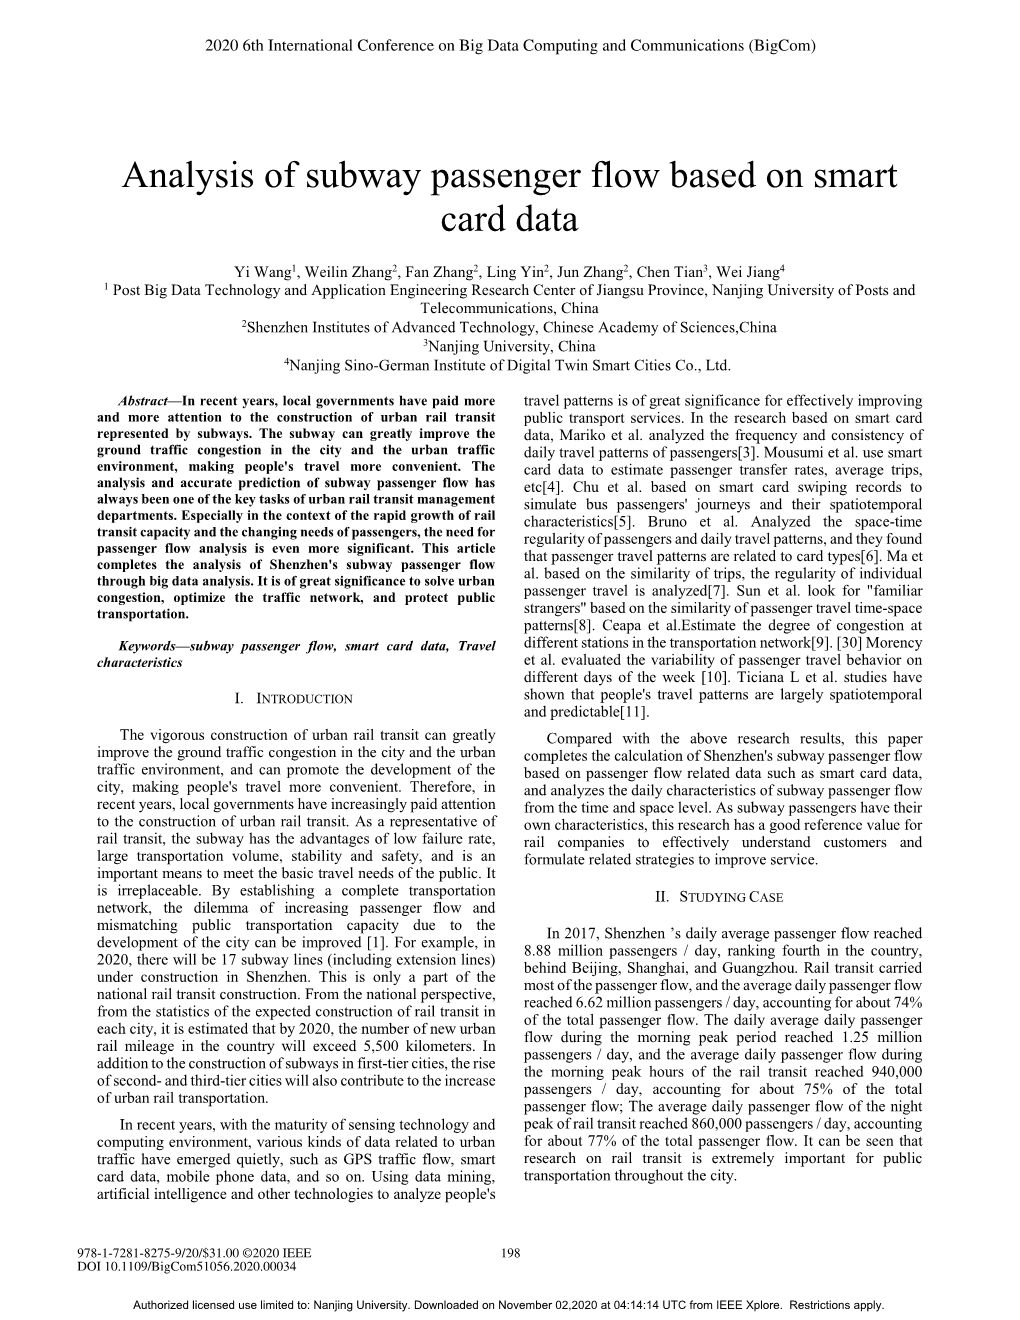 Analysis of Subway Passenger Flow Based on Smart Card Data